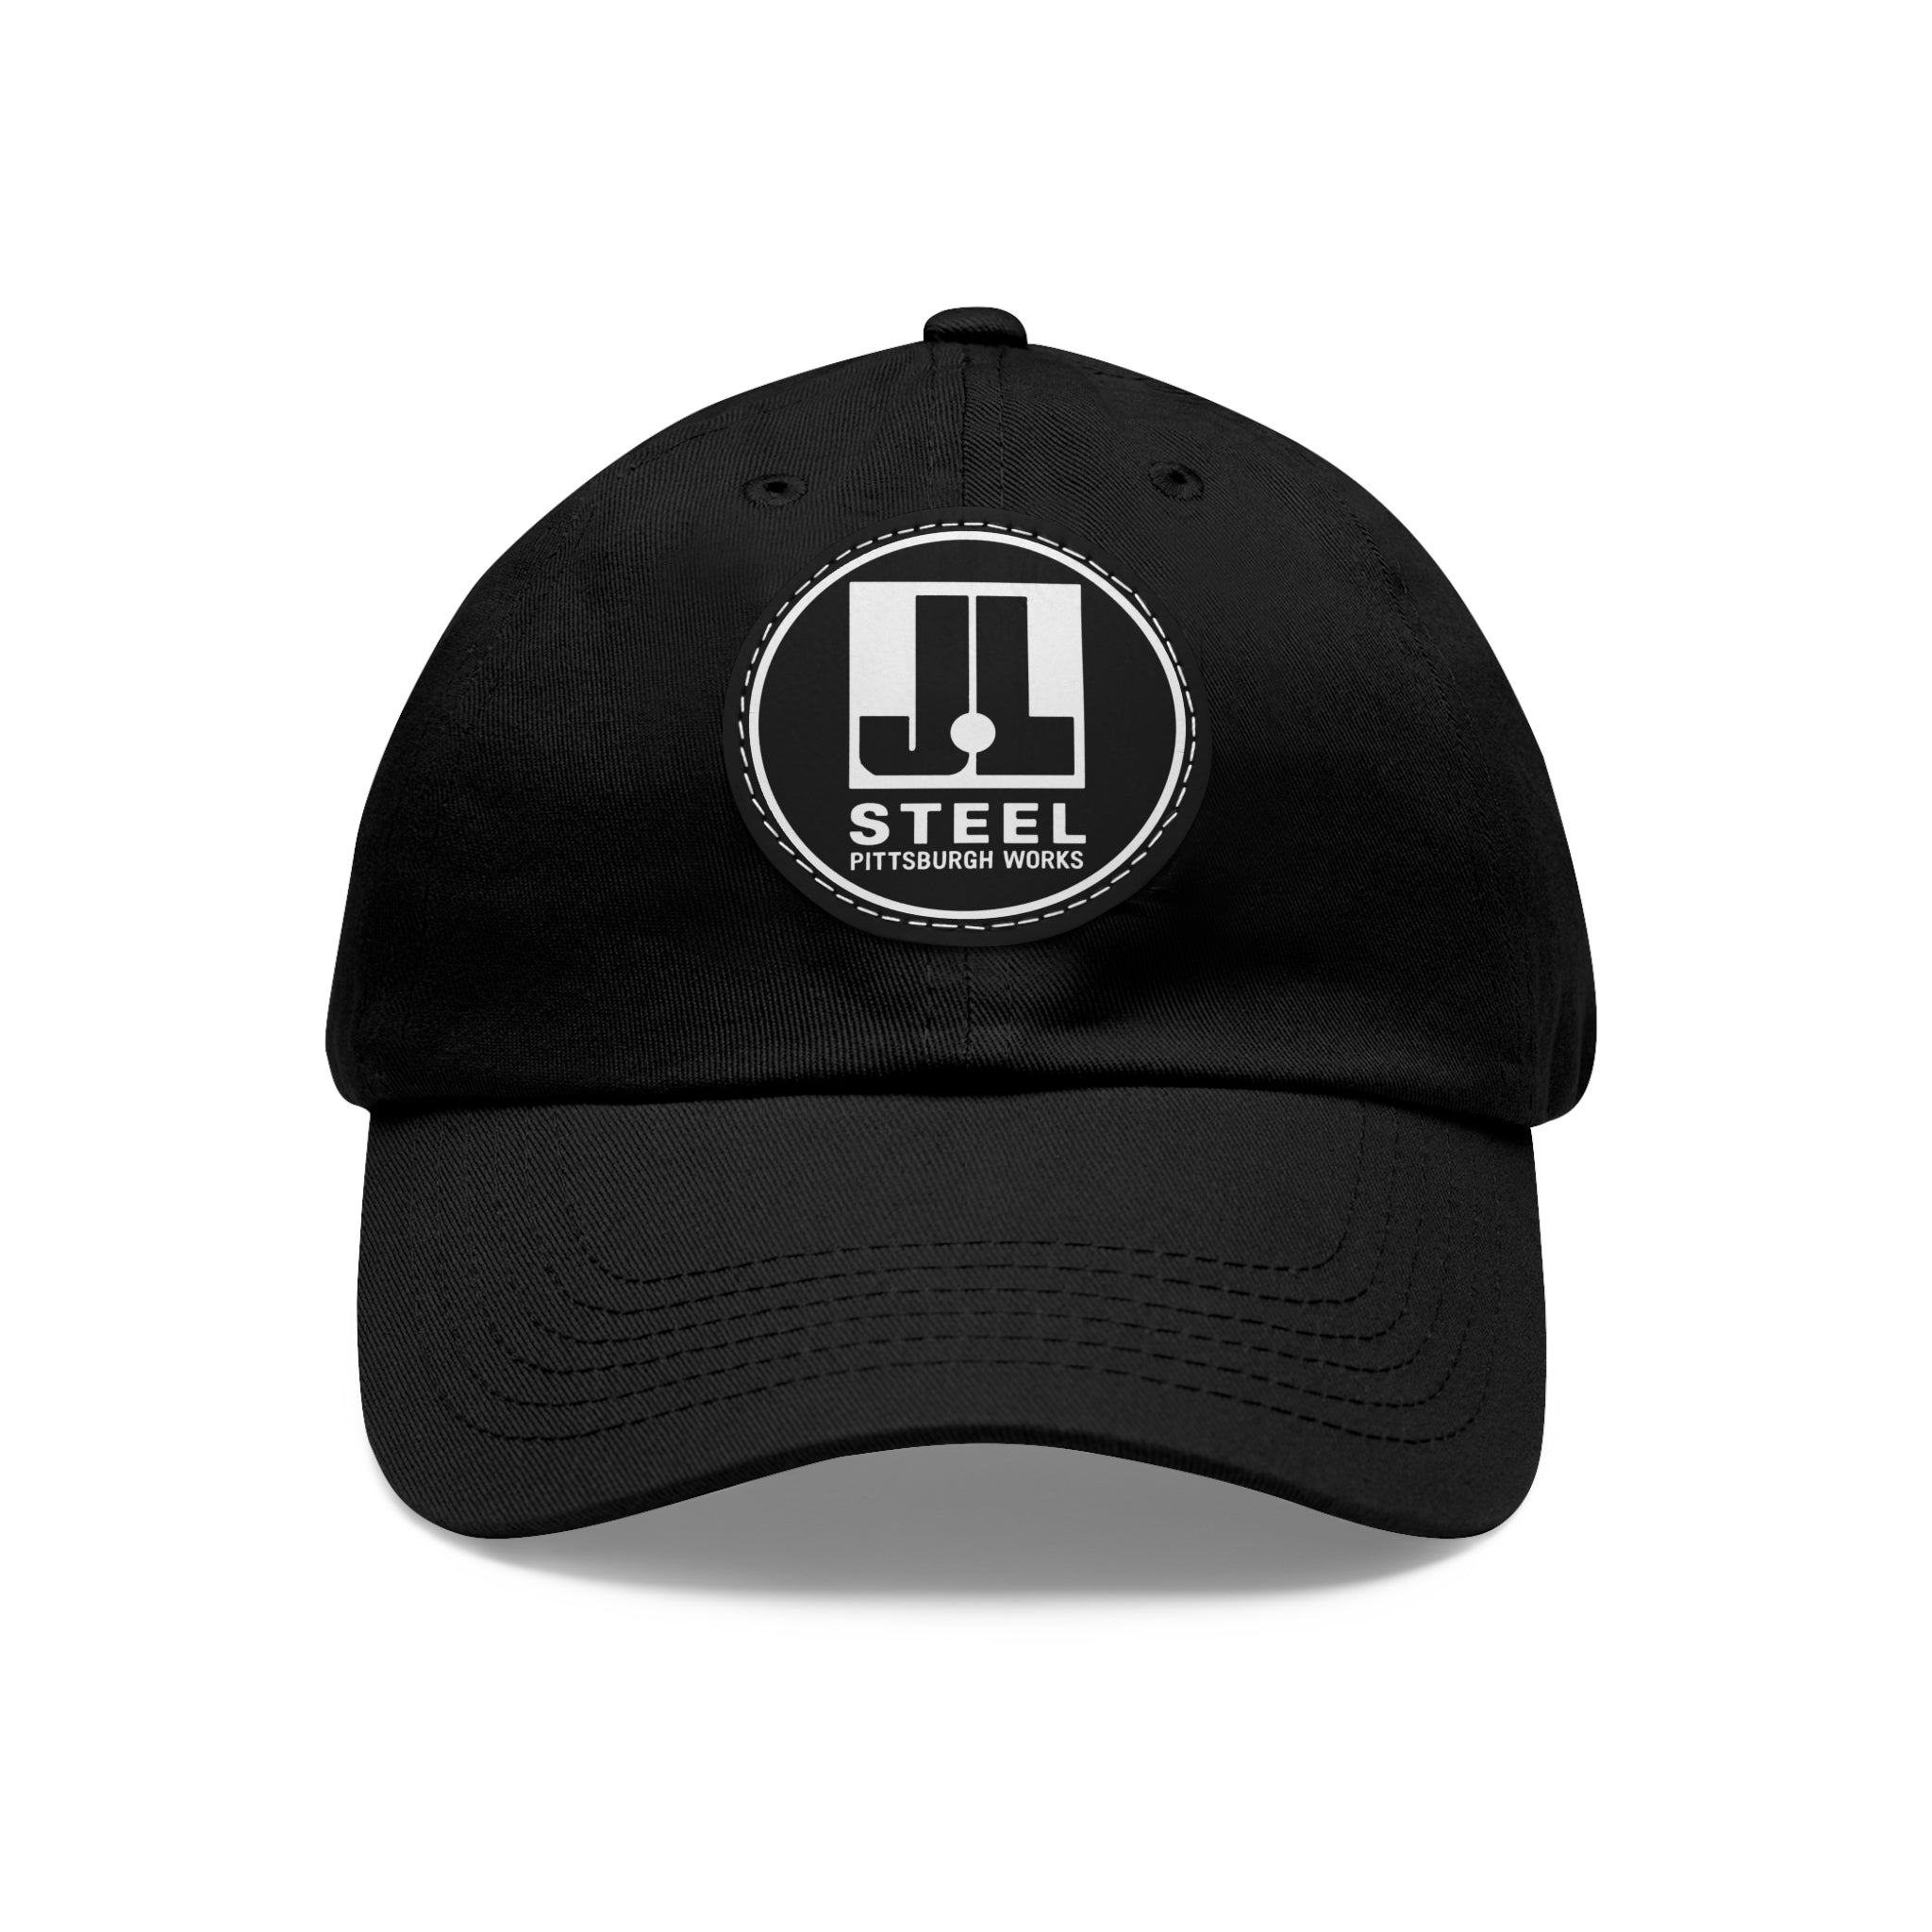 J&L Steel - Pittsburgh Works - Printed Patch Hat - Yinzylvania